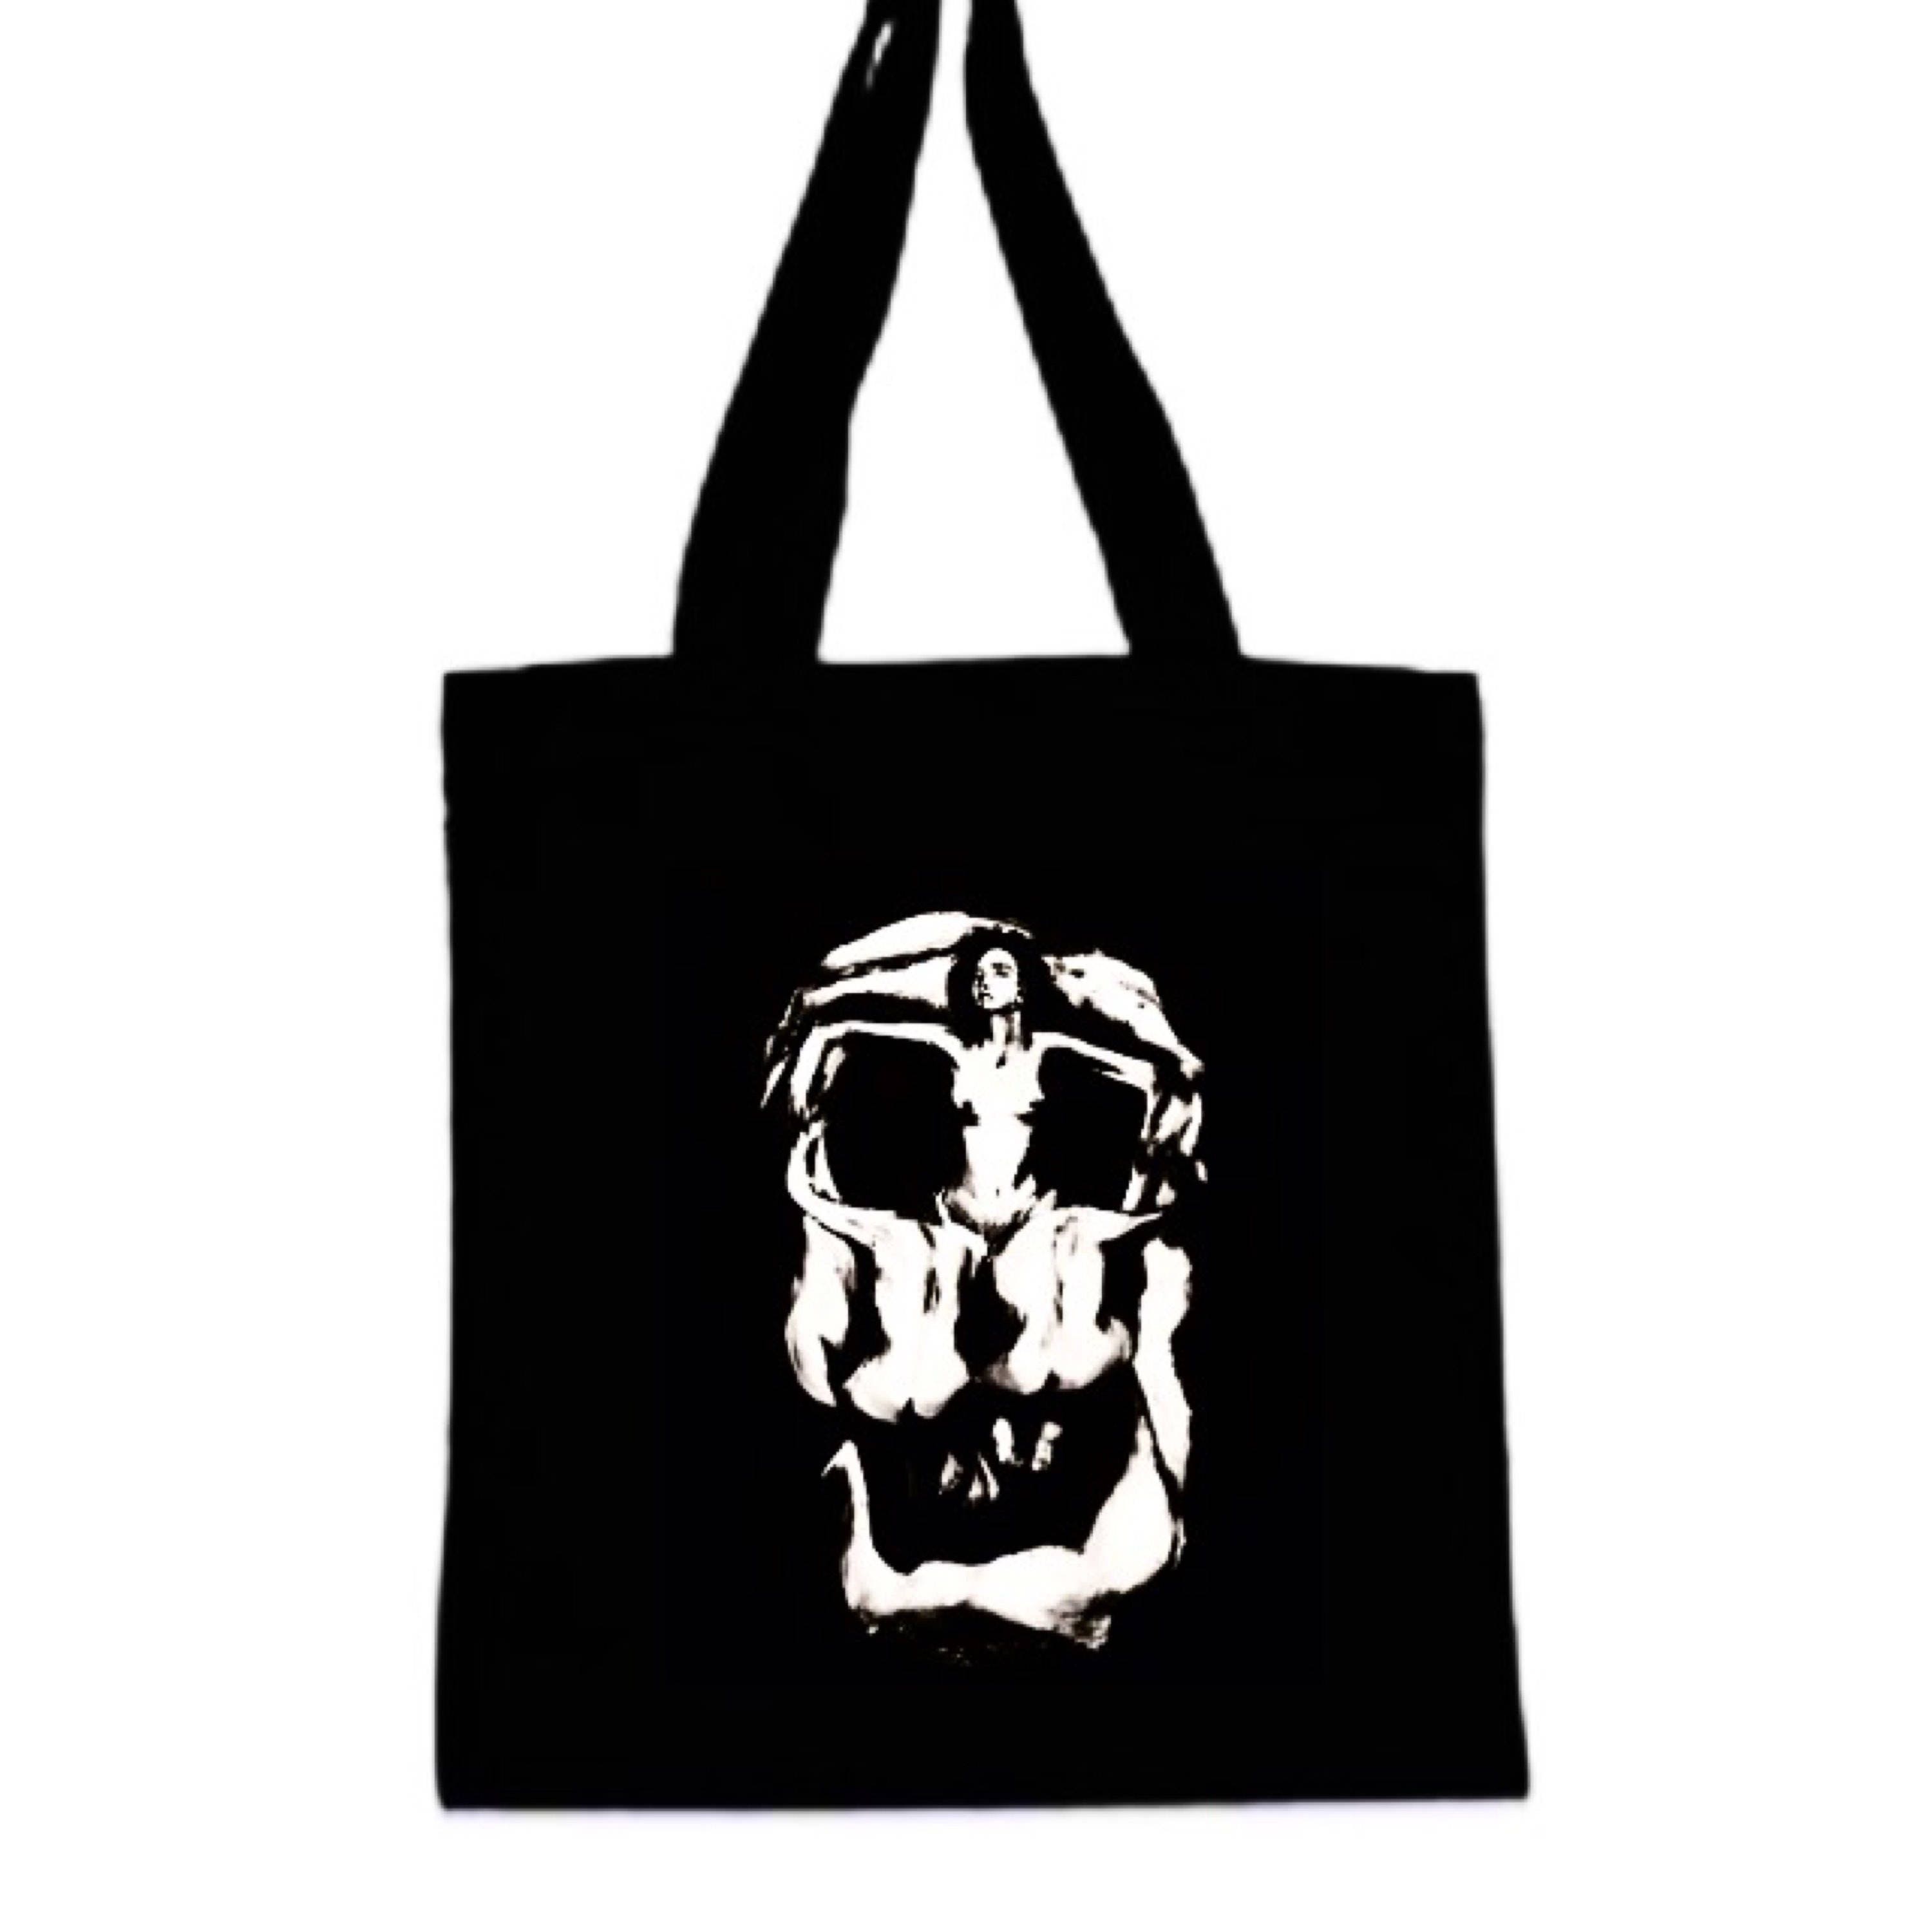 Salvador Dali inspired Tote Bag